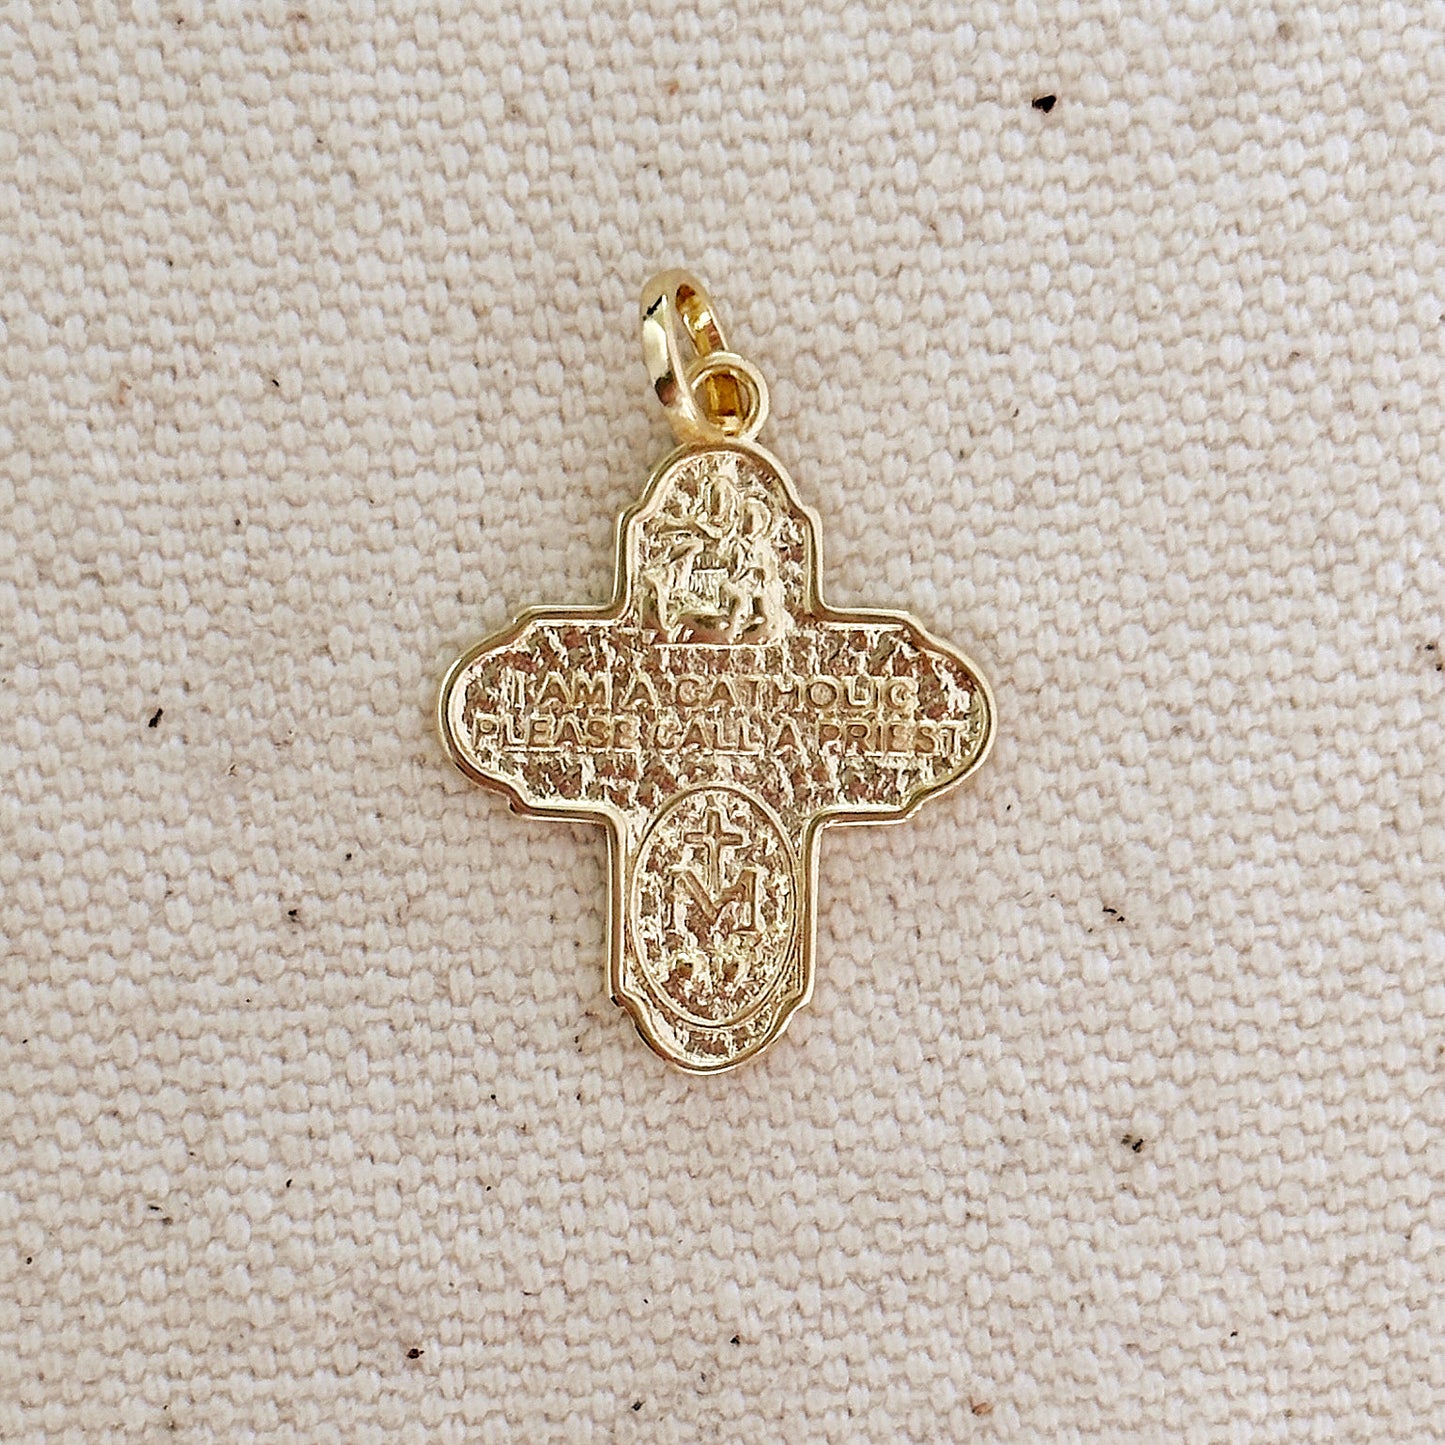 18k Gold Filled Catholic Four-Way Cross Pendant